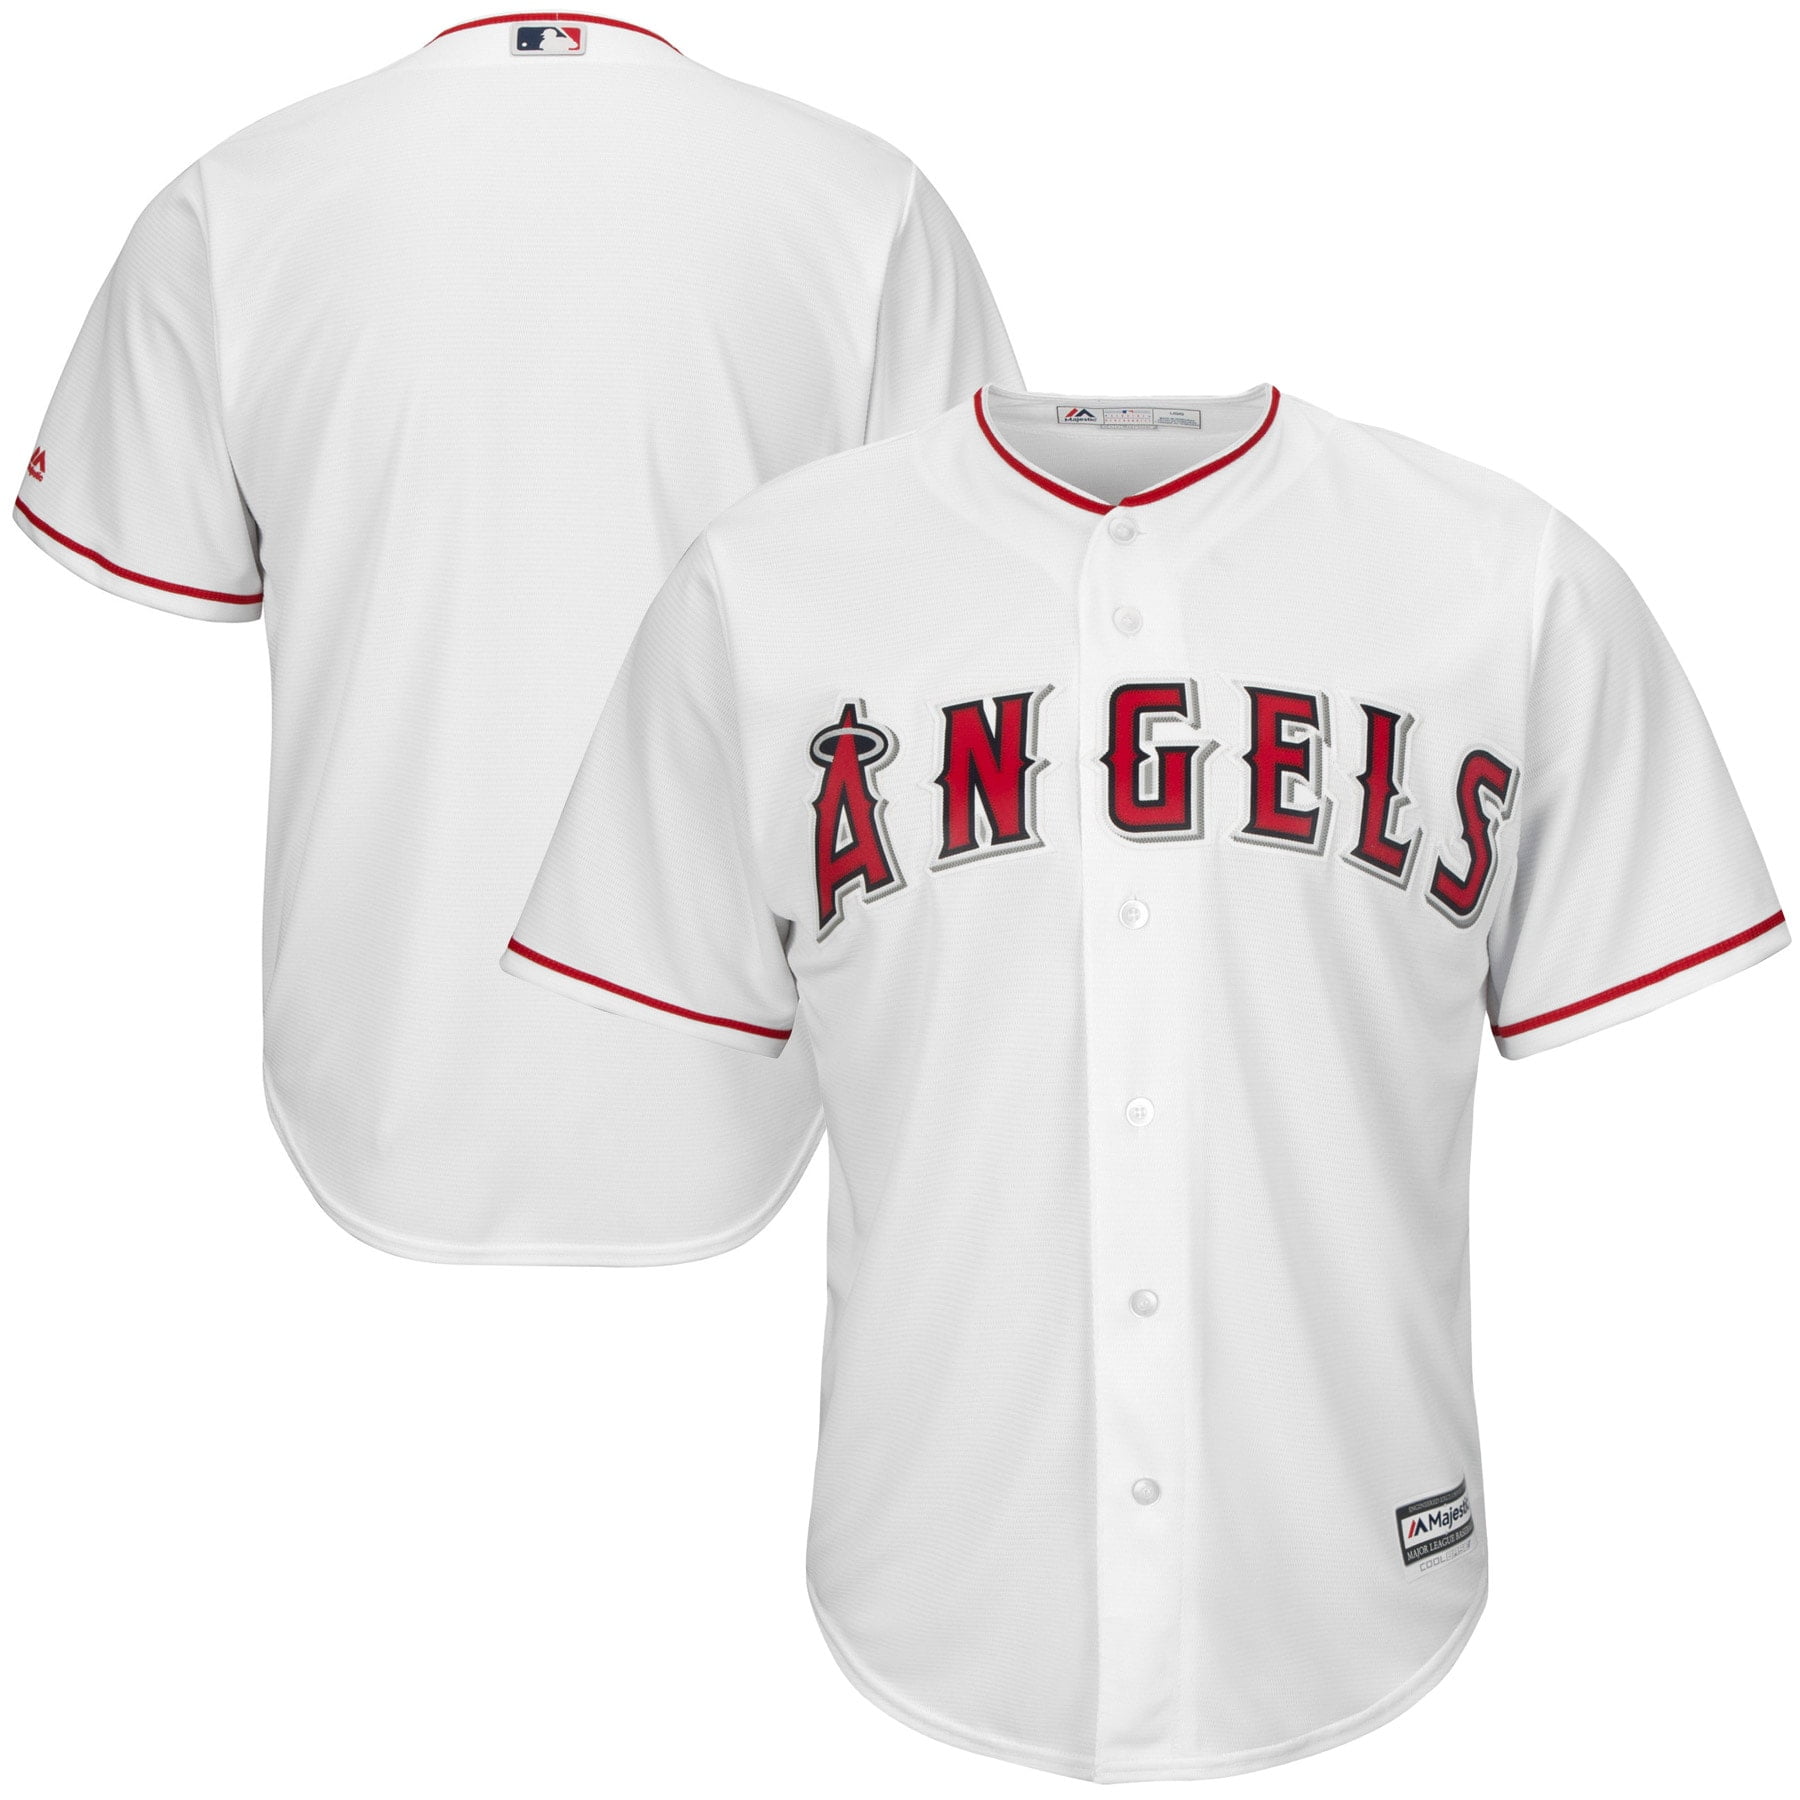 angels baseball shirt